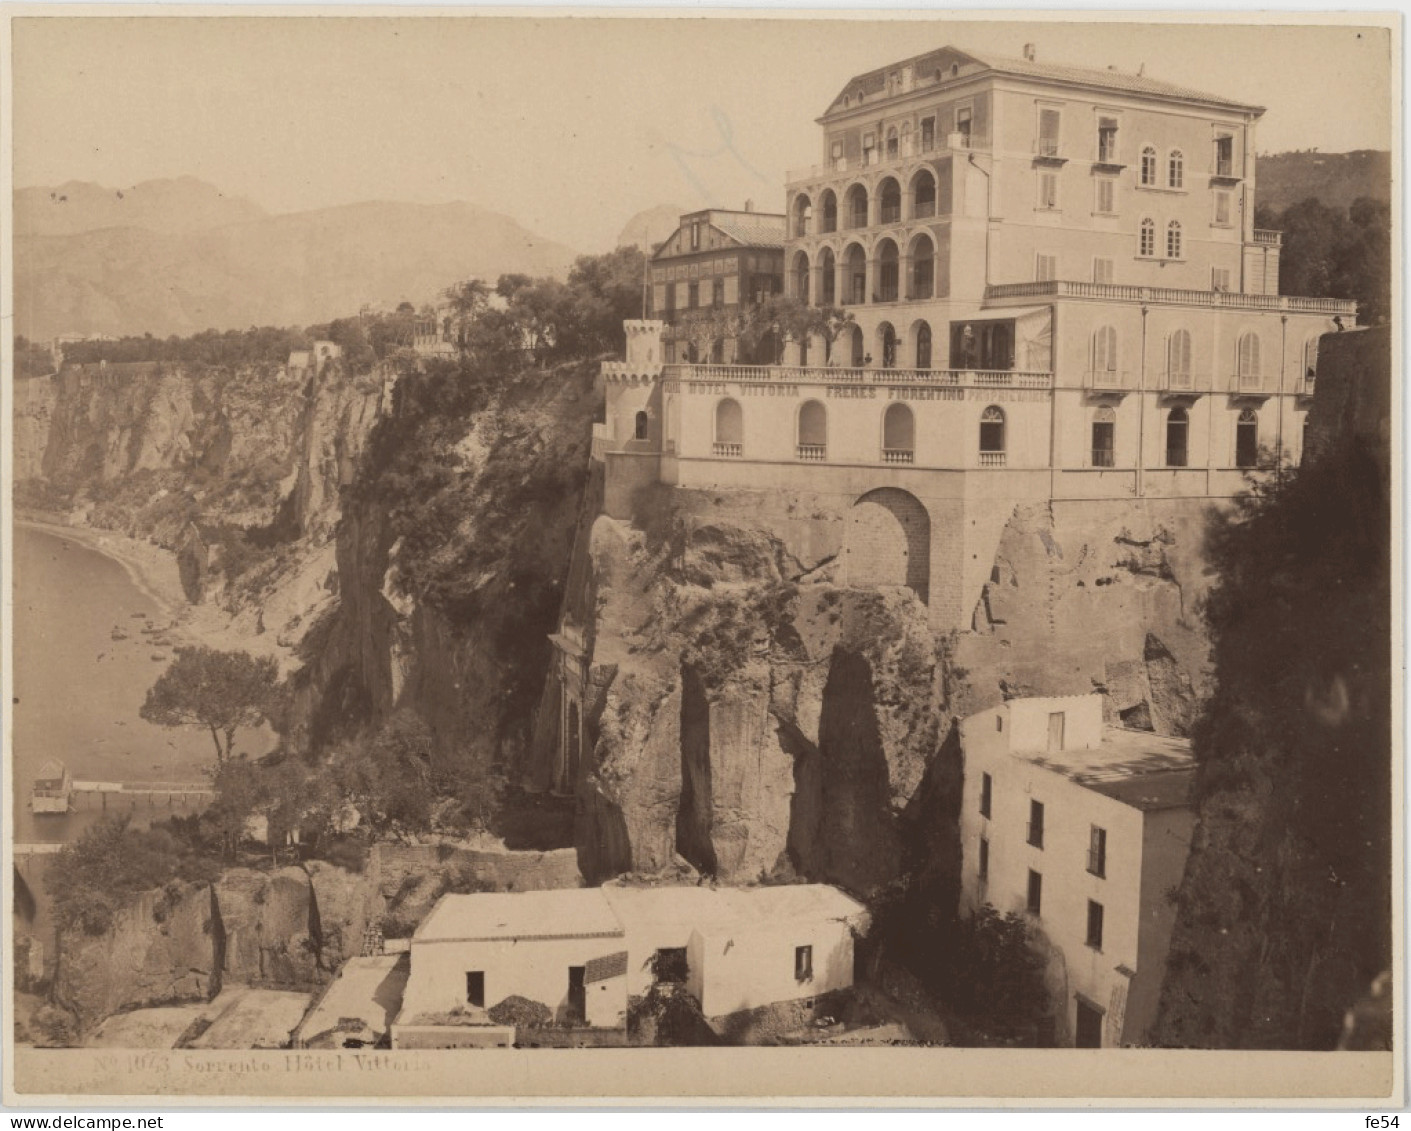 ° ITALIE ° NAPLES - NAPOLI ° SORRENTO ° HOTEL VITTORIA ° Photo De 1878 ° - Lieux